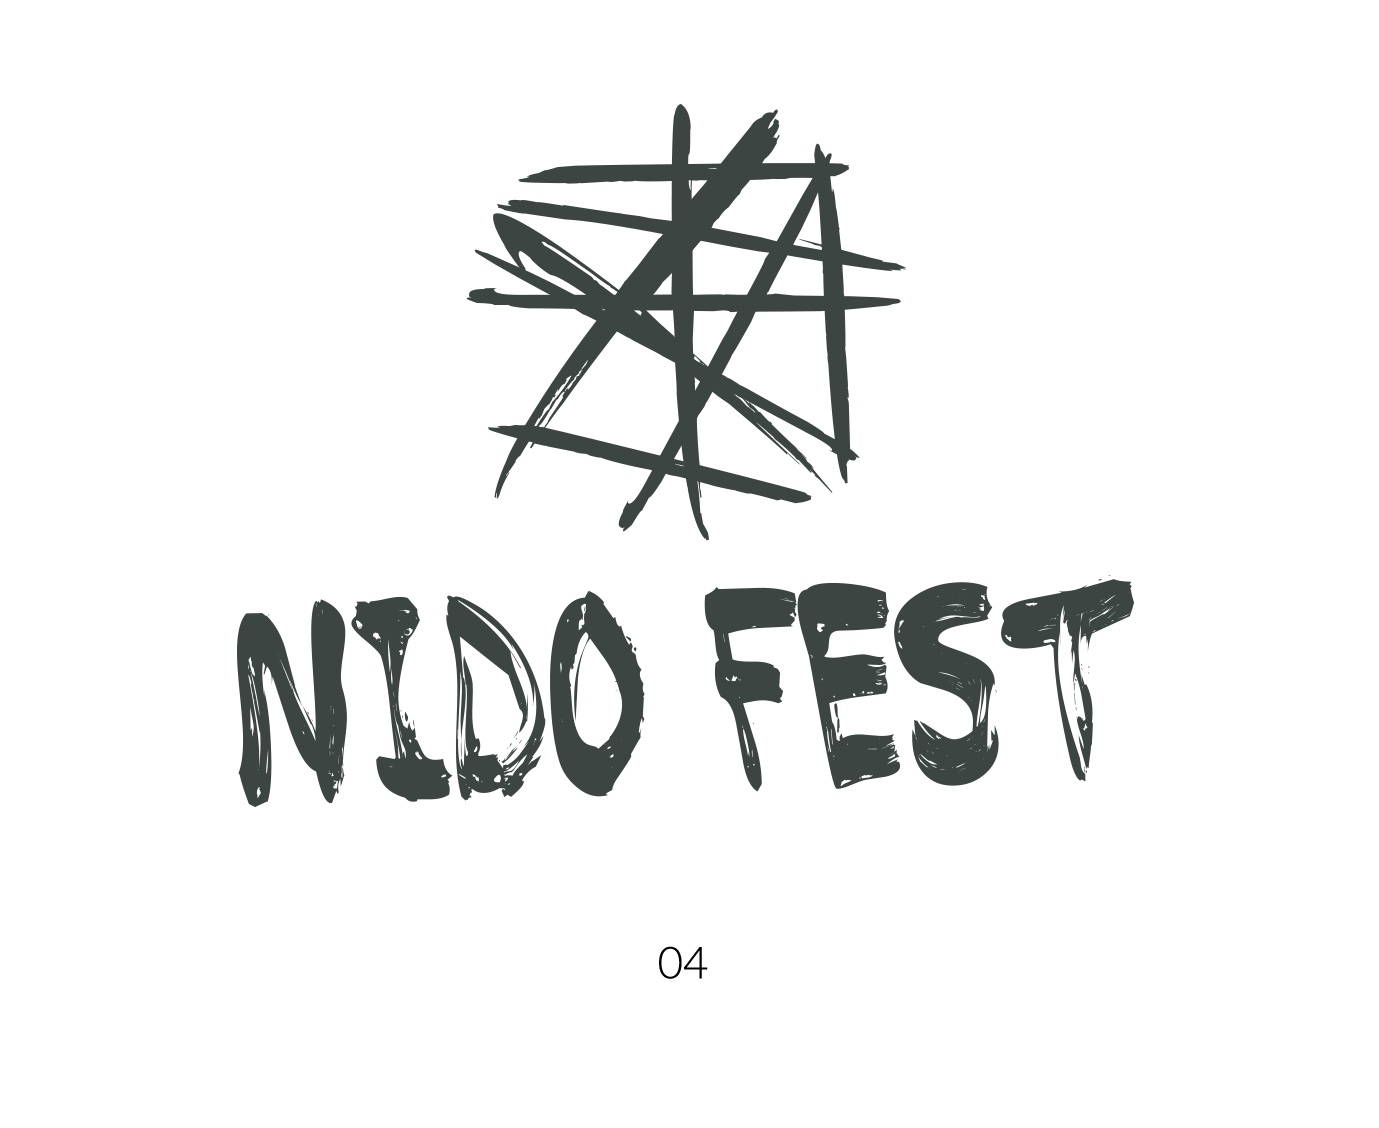 NidoFest logo proposal 04